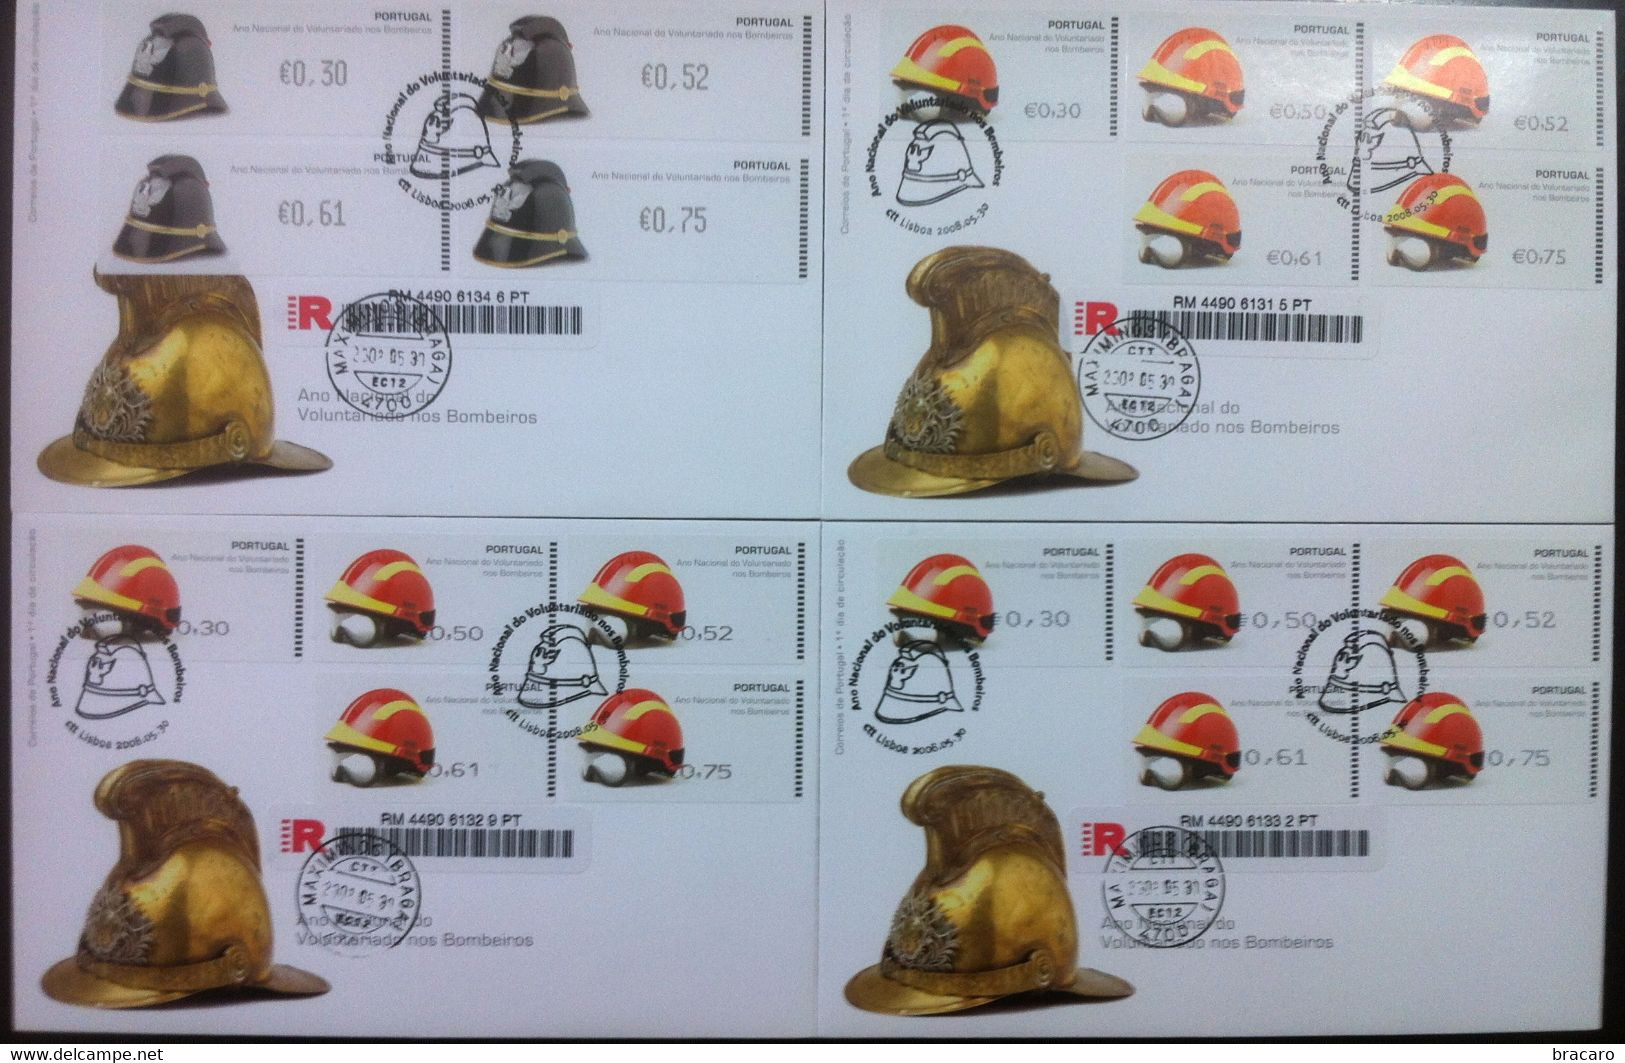 Portugal - ATM Machine Stamps - FDC (cover) X 4 - BOMBEIROS / FIREMEN 2008 - Registered, Cancel Braga - Macchine Per Obliterare (EMA)